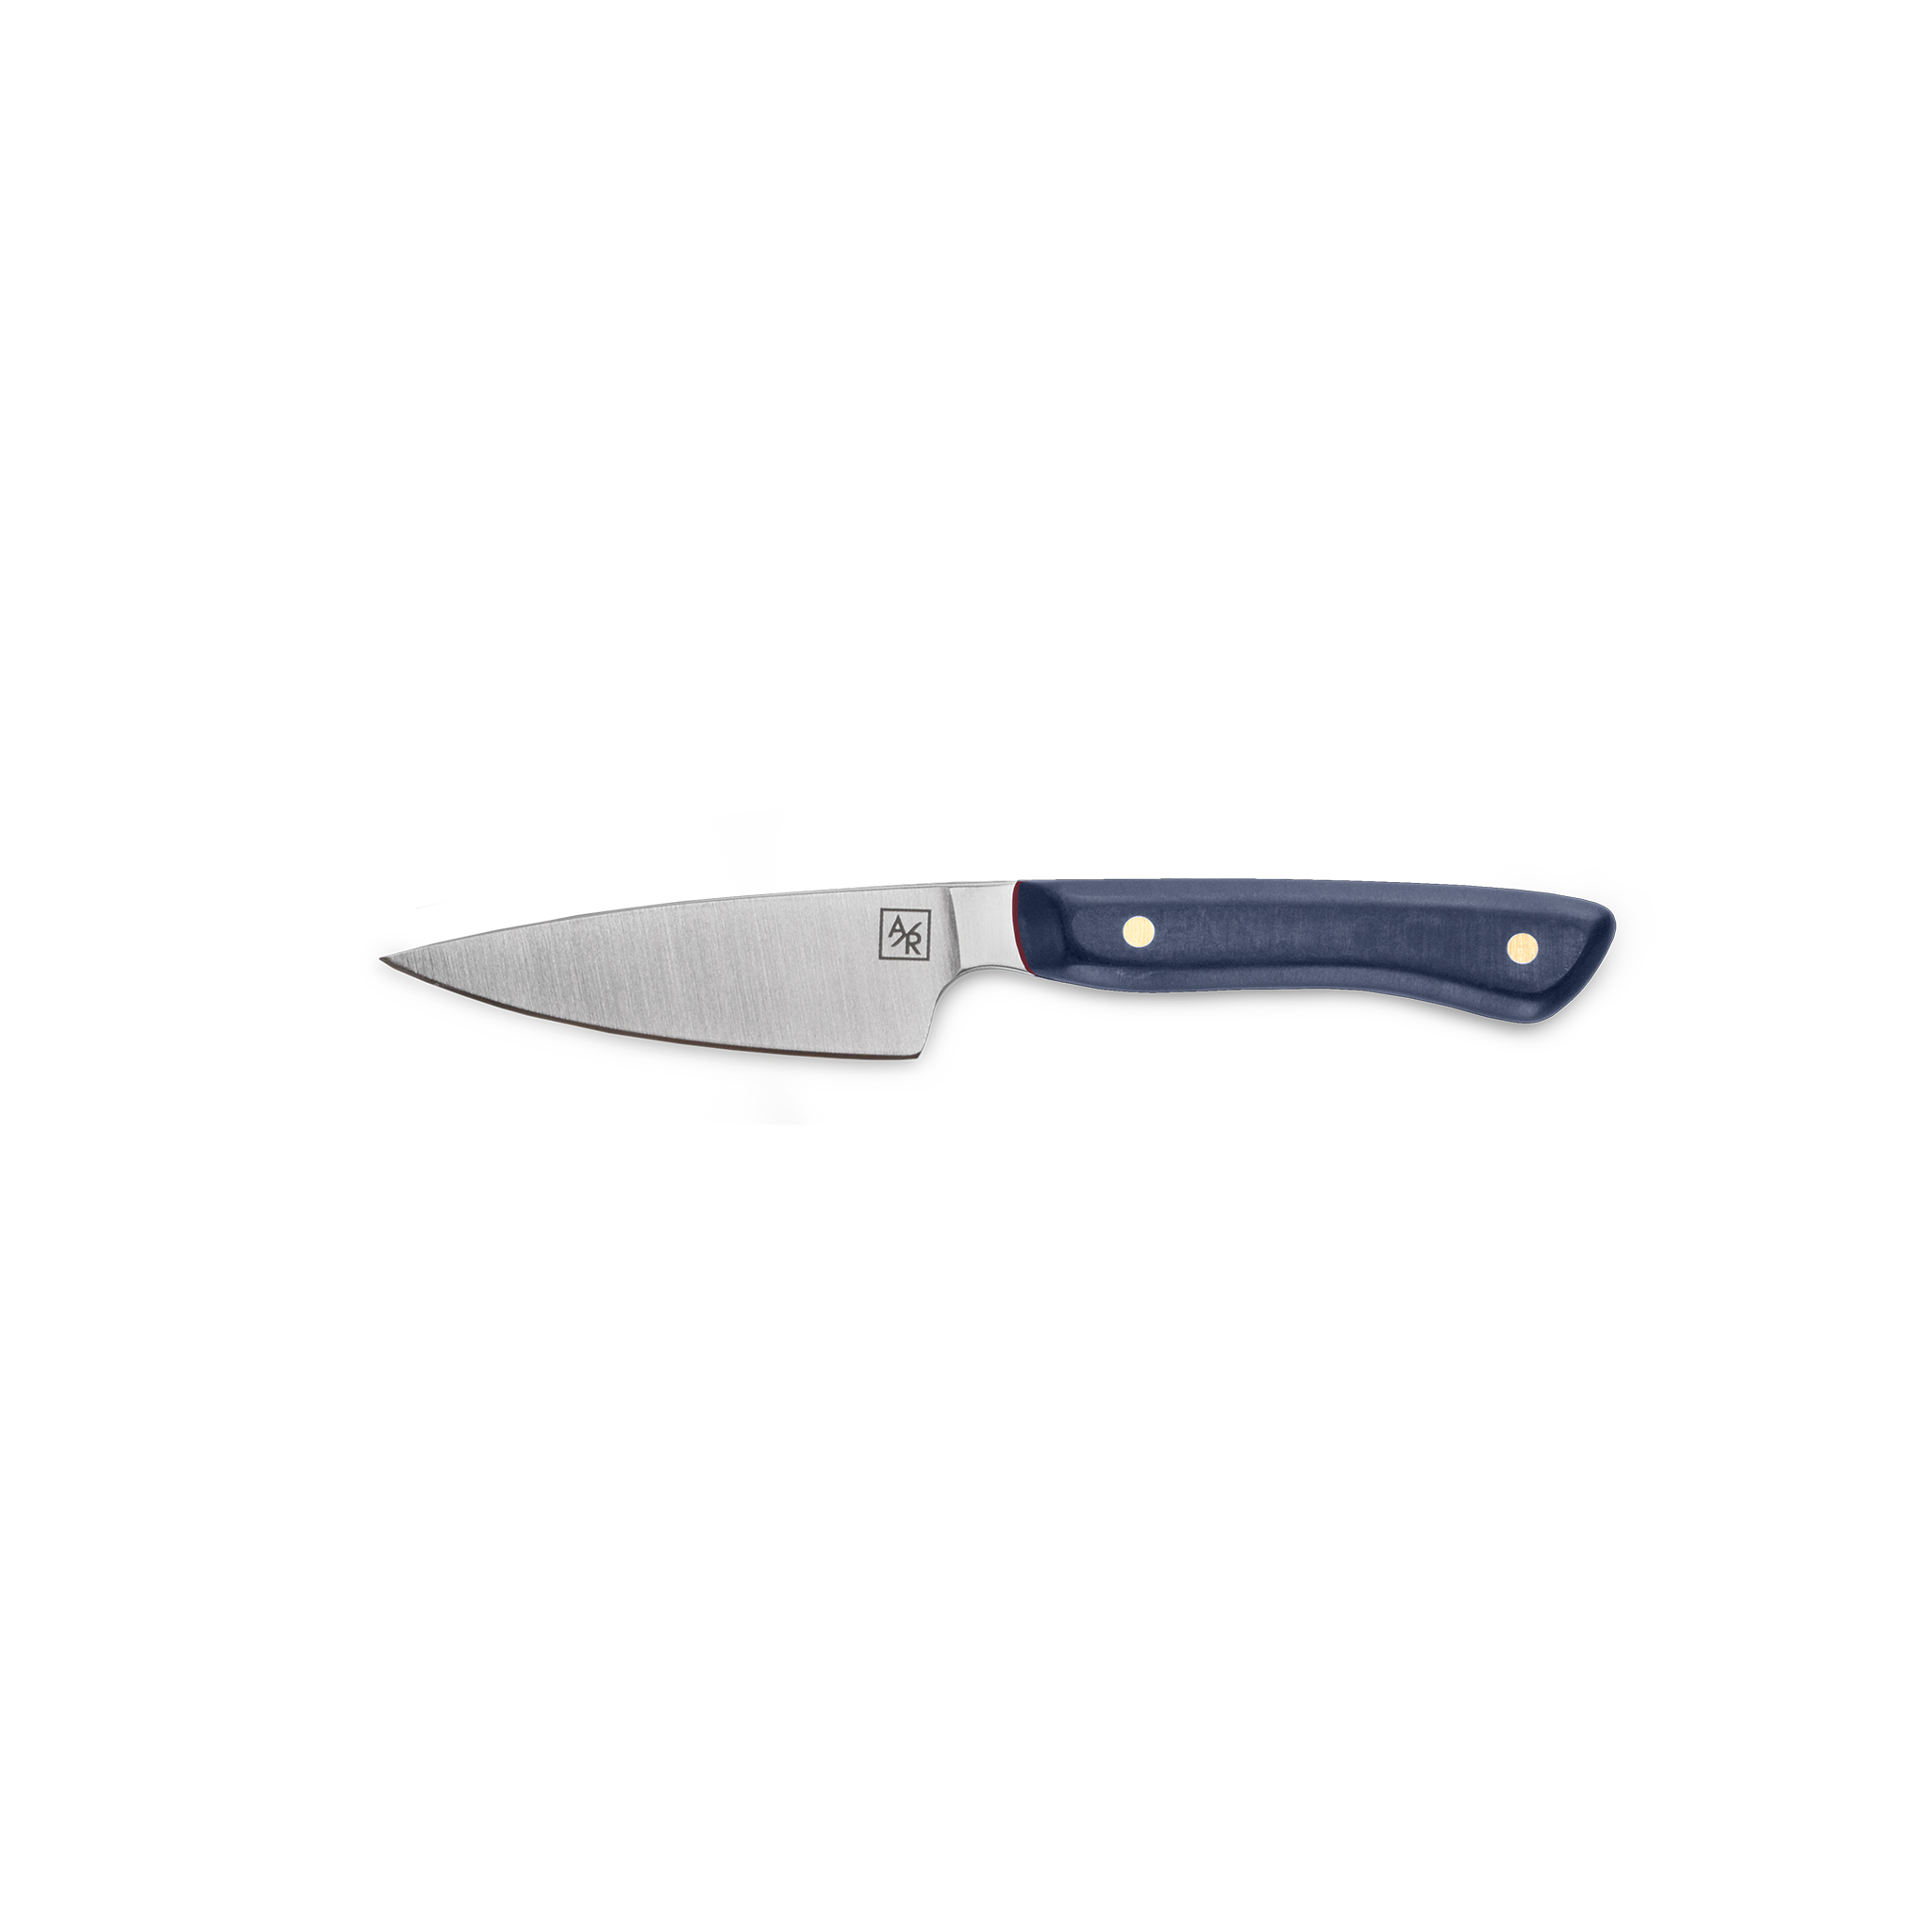  Advanced Ceramic Paring Knife - 4 Inch Blade Never